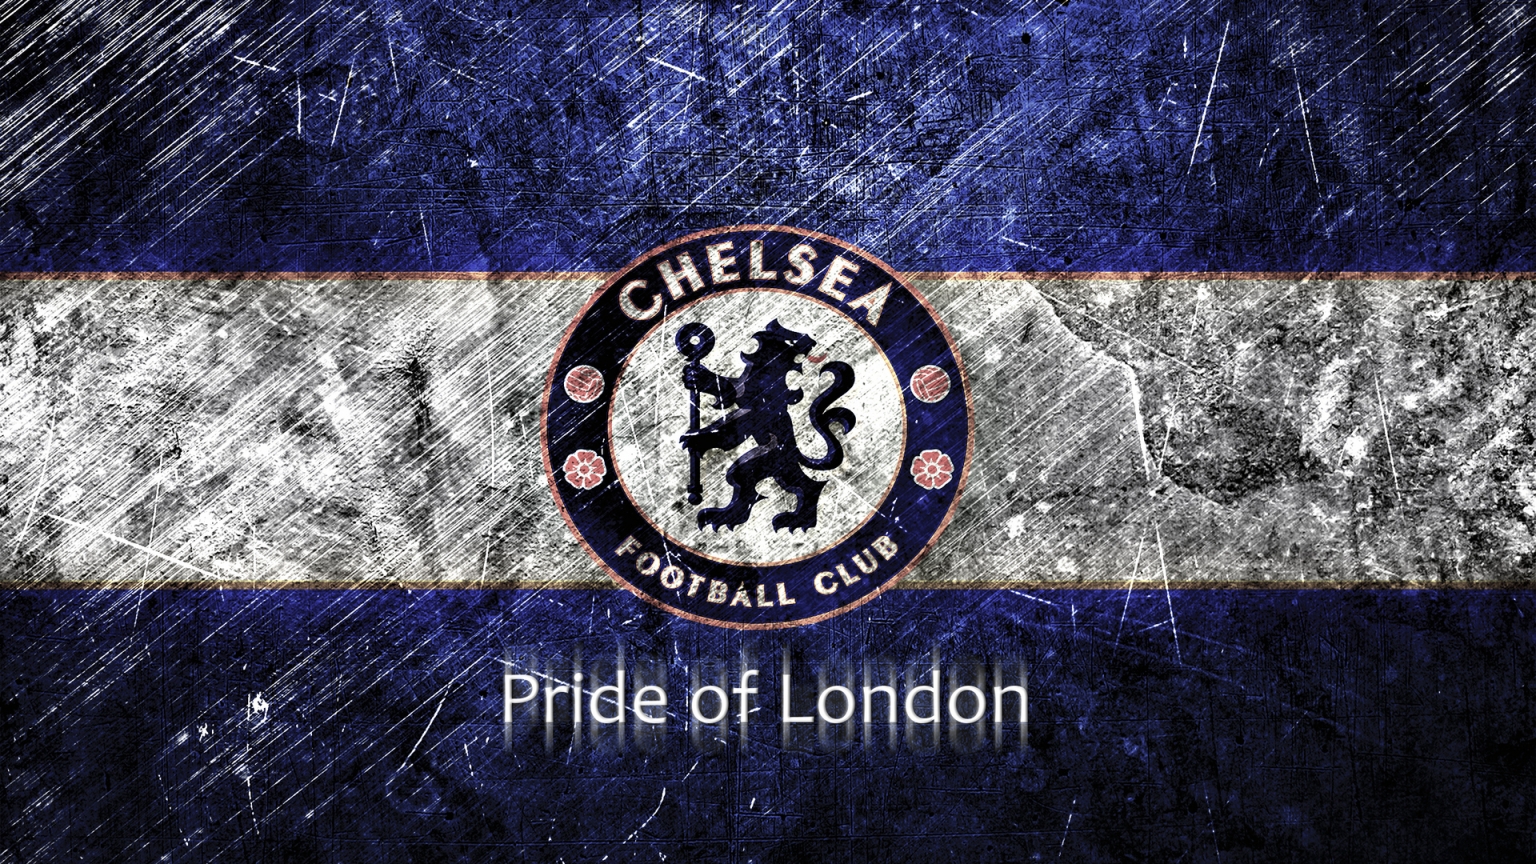 Chelsea Pride of London for 1536 x 864 HDTV resolution